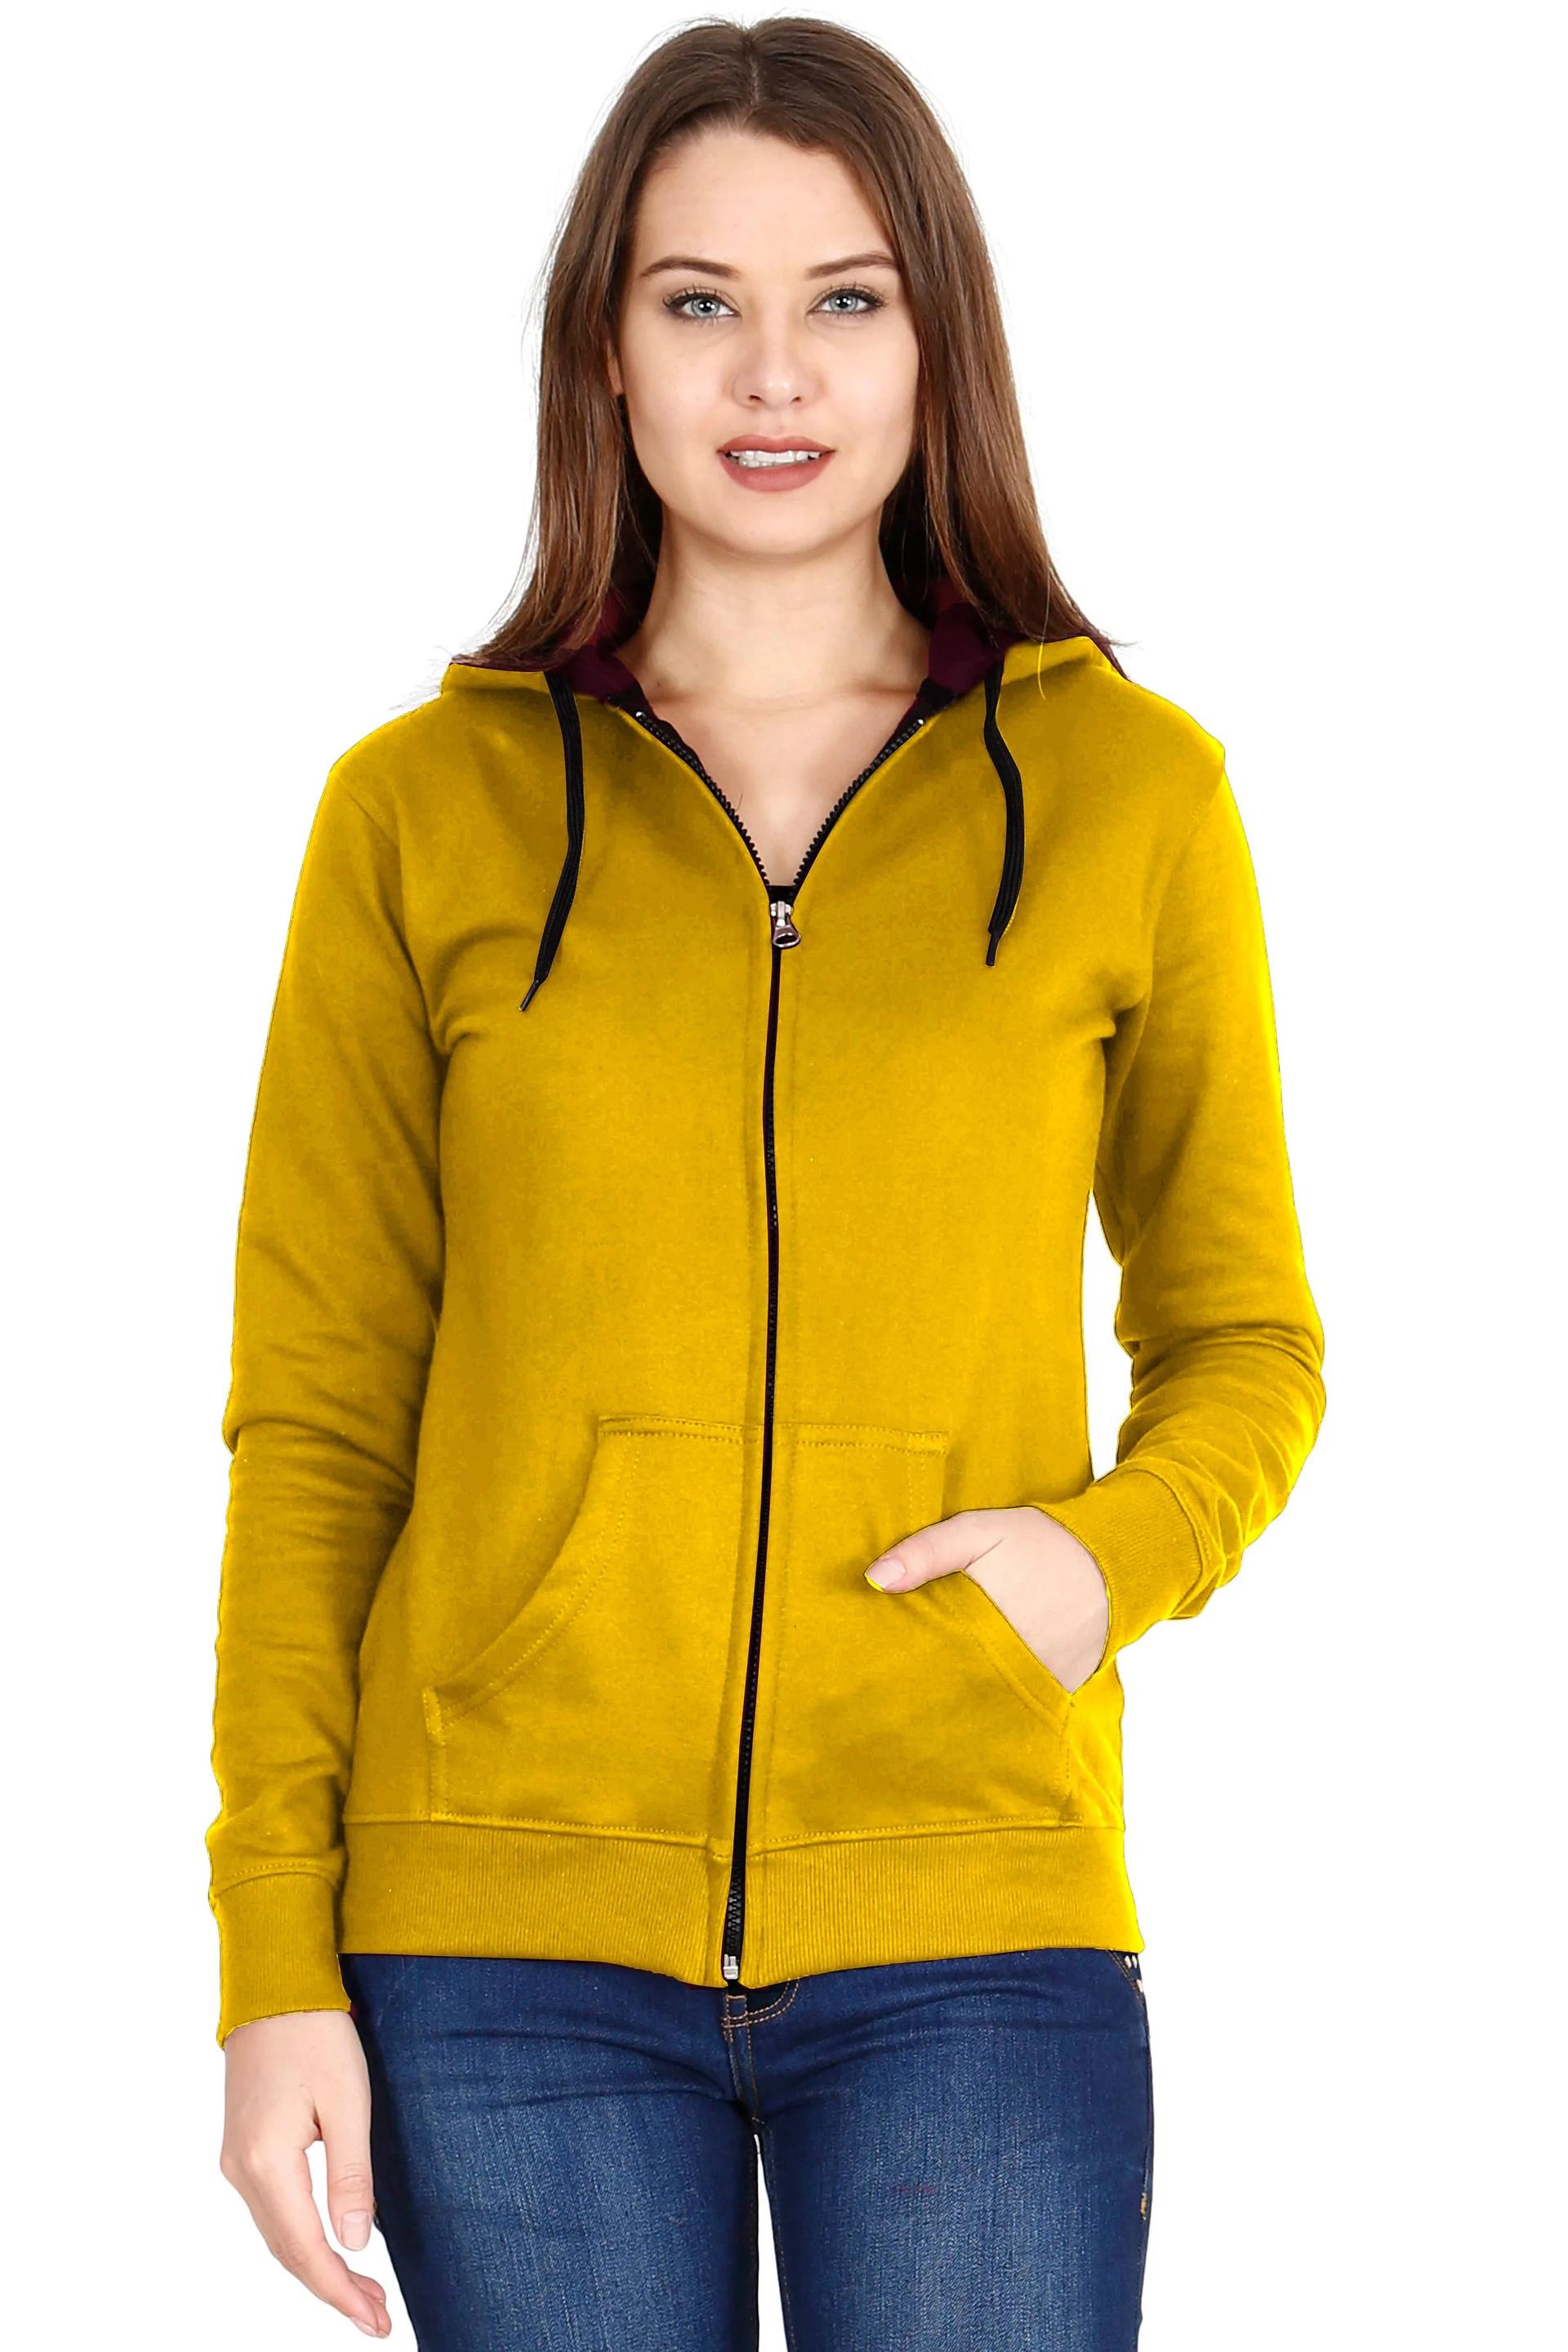 women's-cotton-plain-full-sleeve-hoodies/sweatshirt